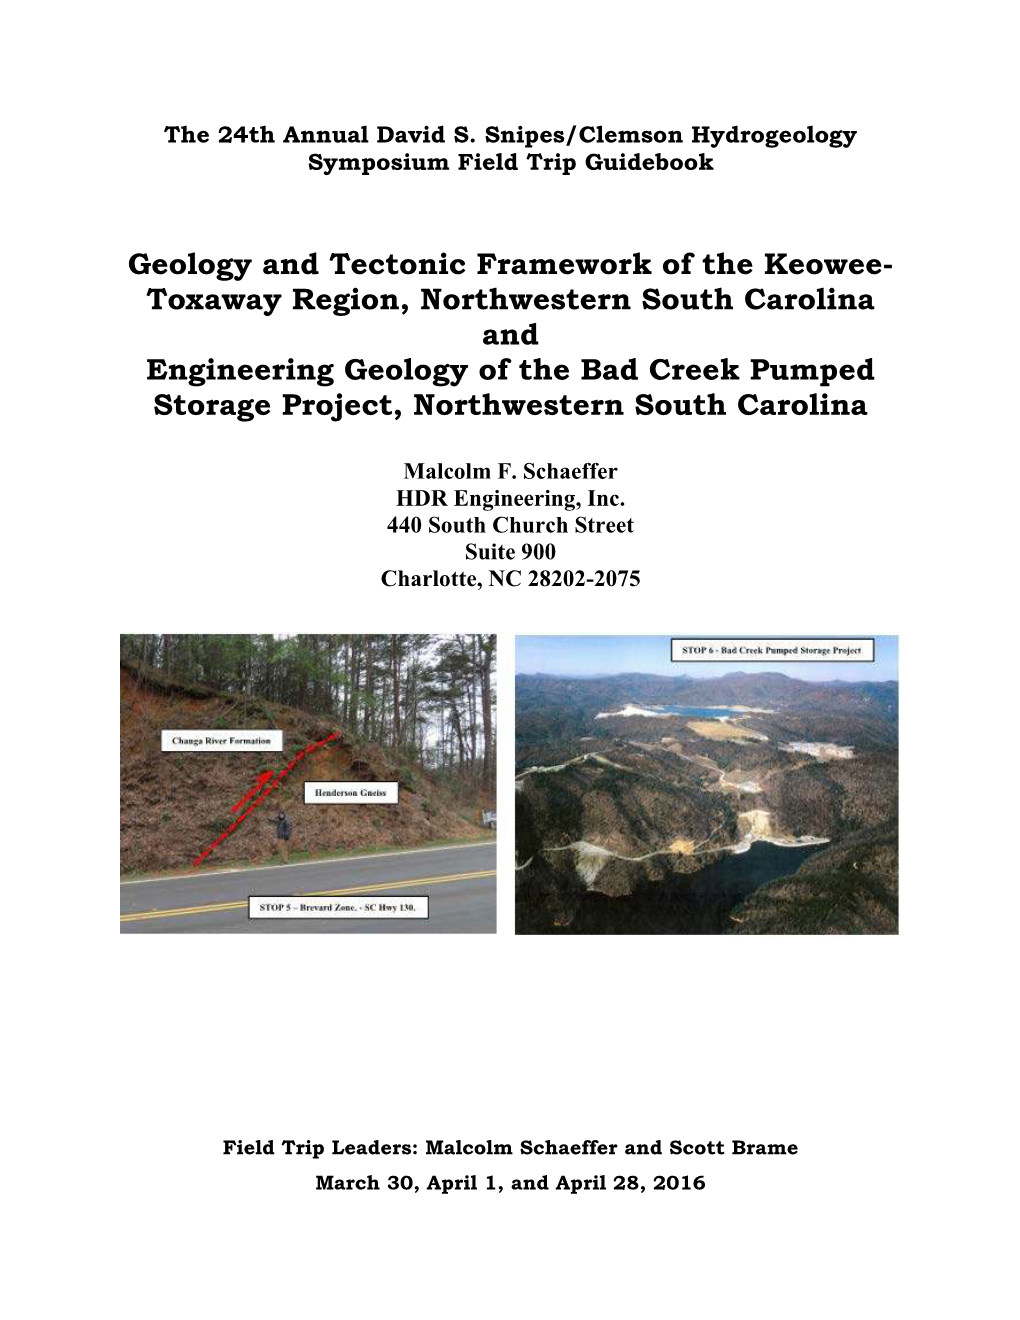 Geology and Tectonic Framework of the Keowee- Toxaway Region